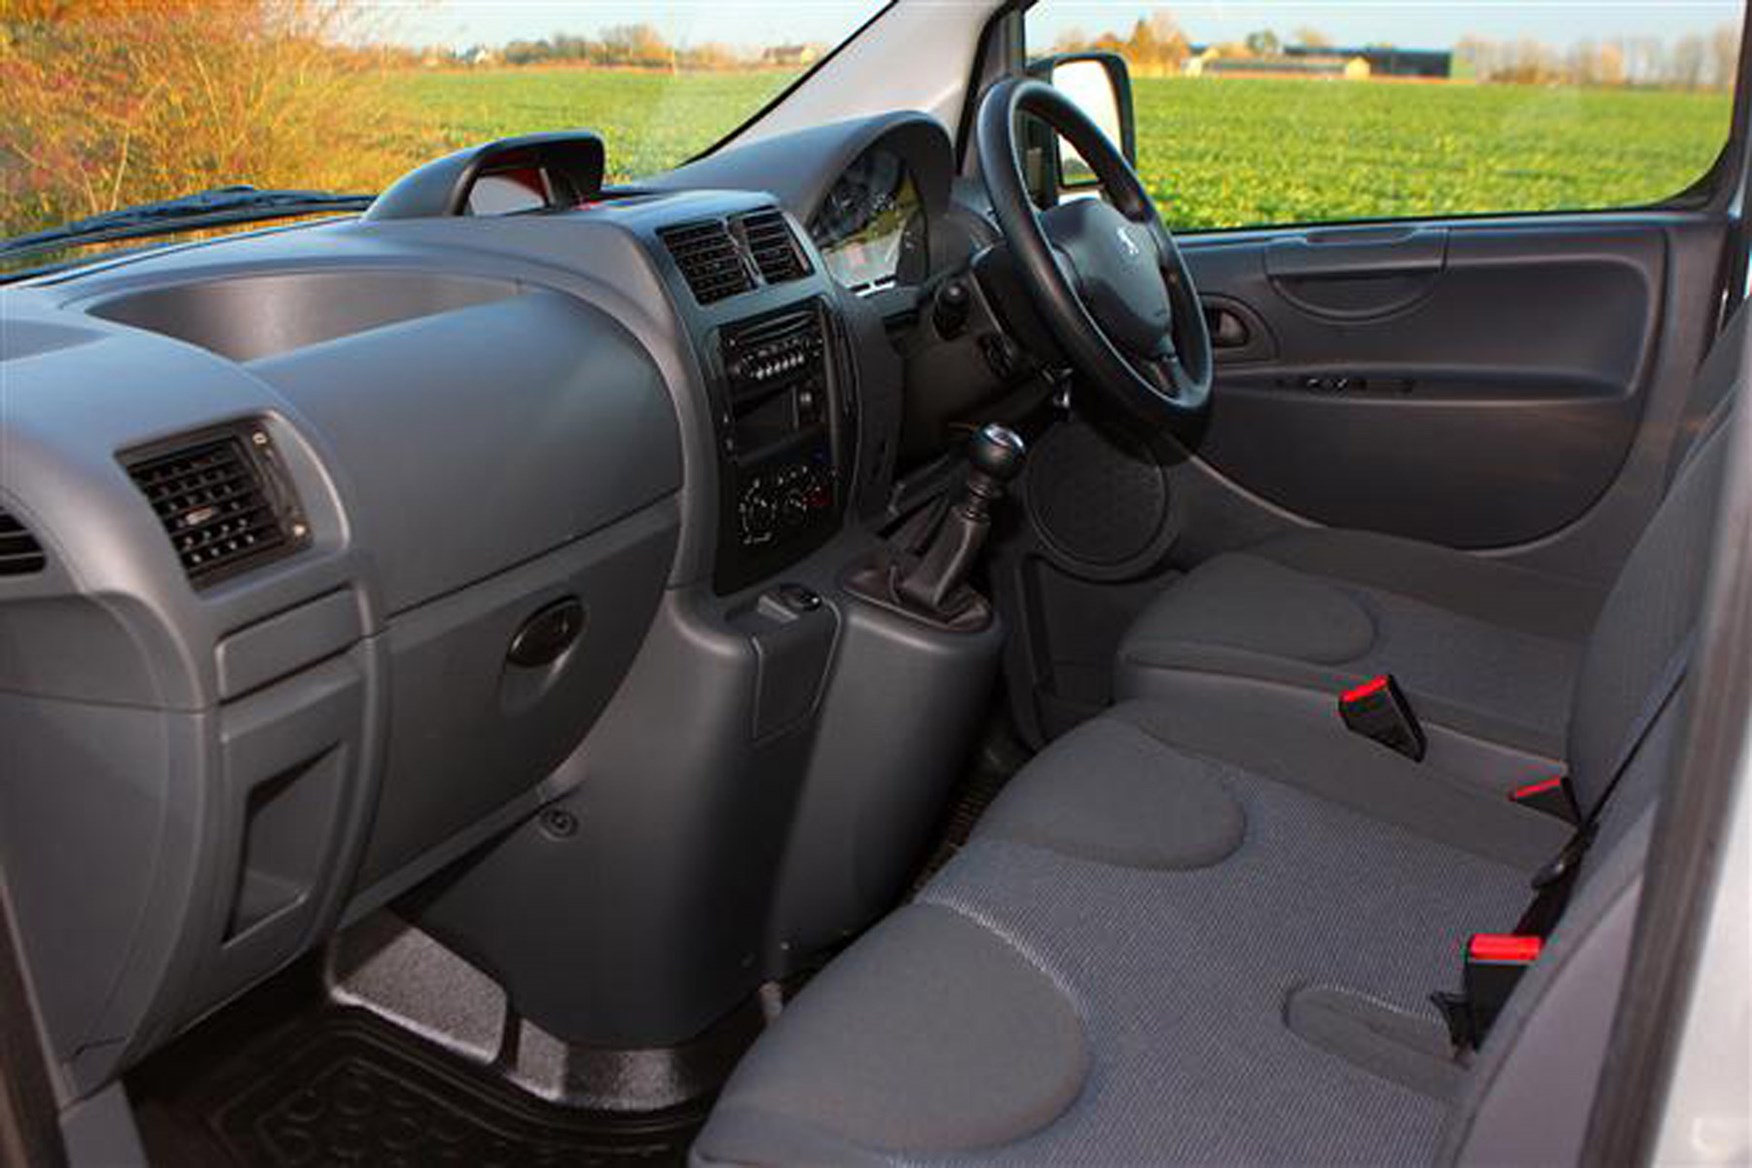 Peugeot Expert 2007-2015 review on Parkers Vans - cabin